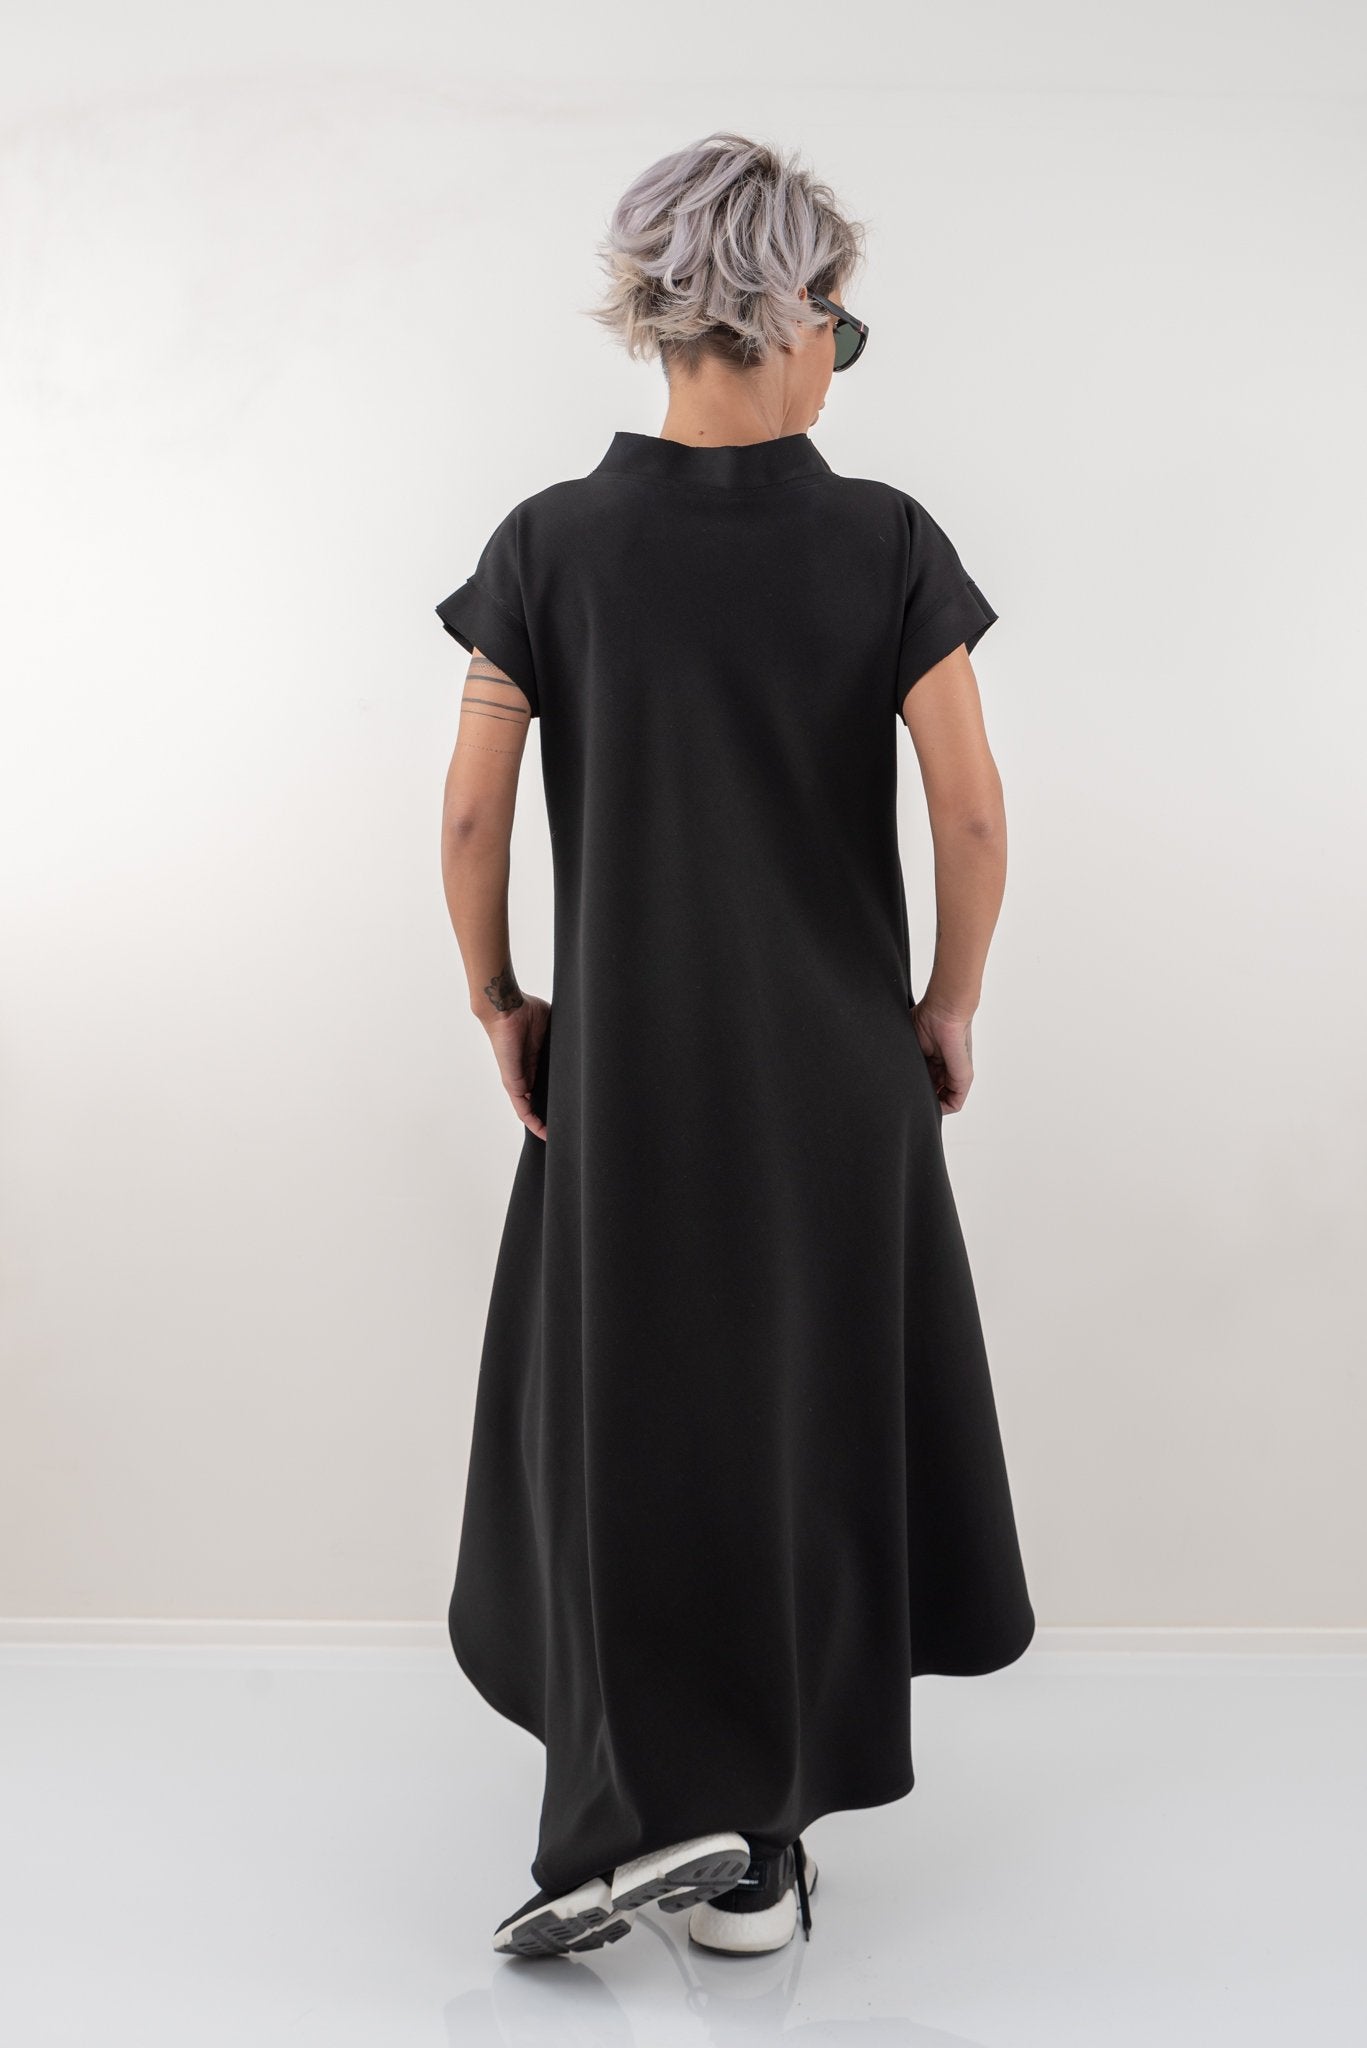 Black Maxi Kaftan Dress With Side Pockets – Clothes By Locker Room